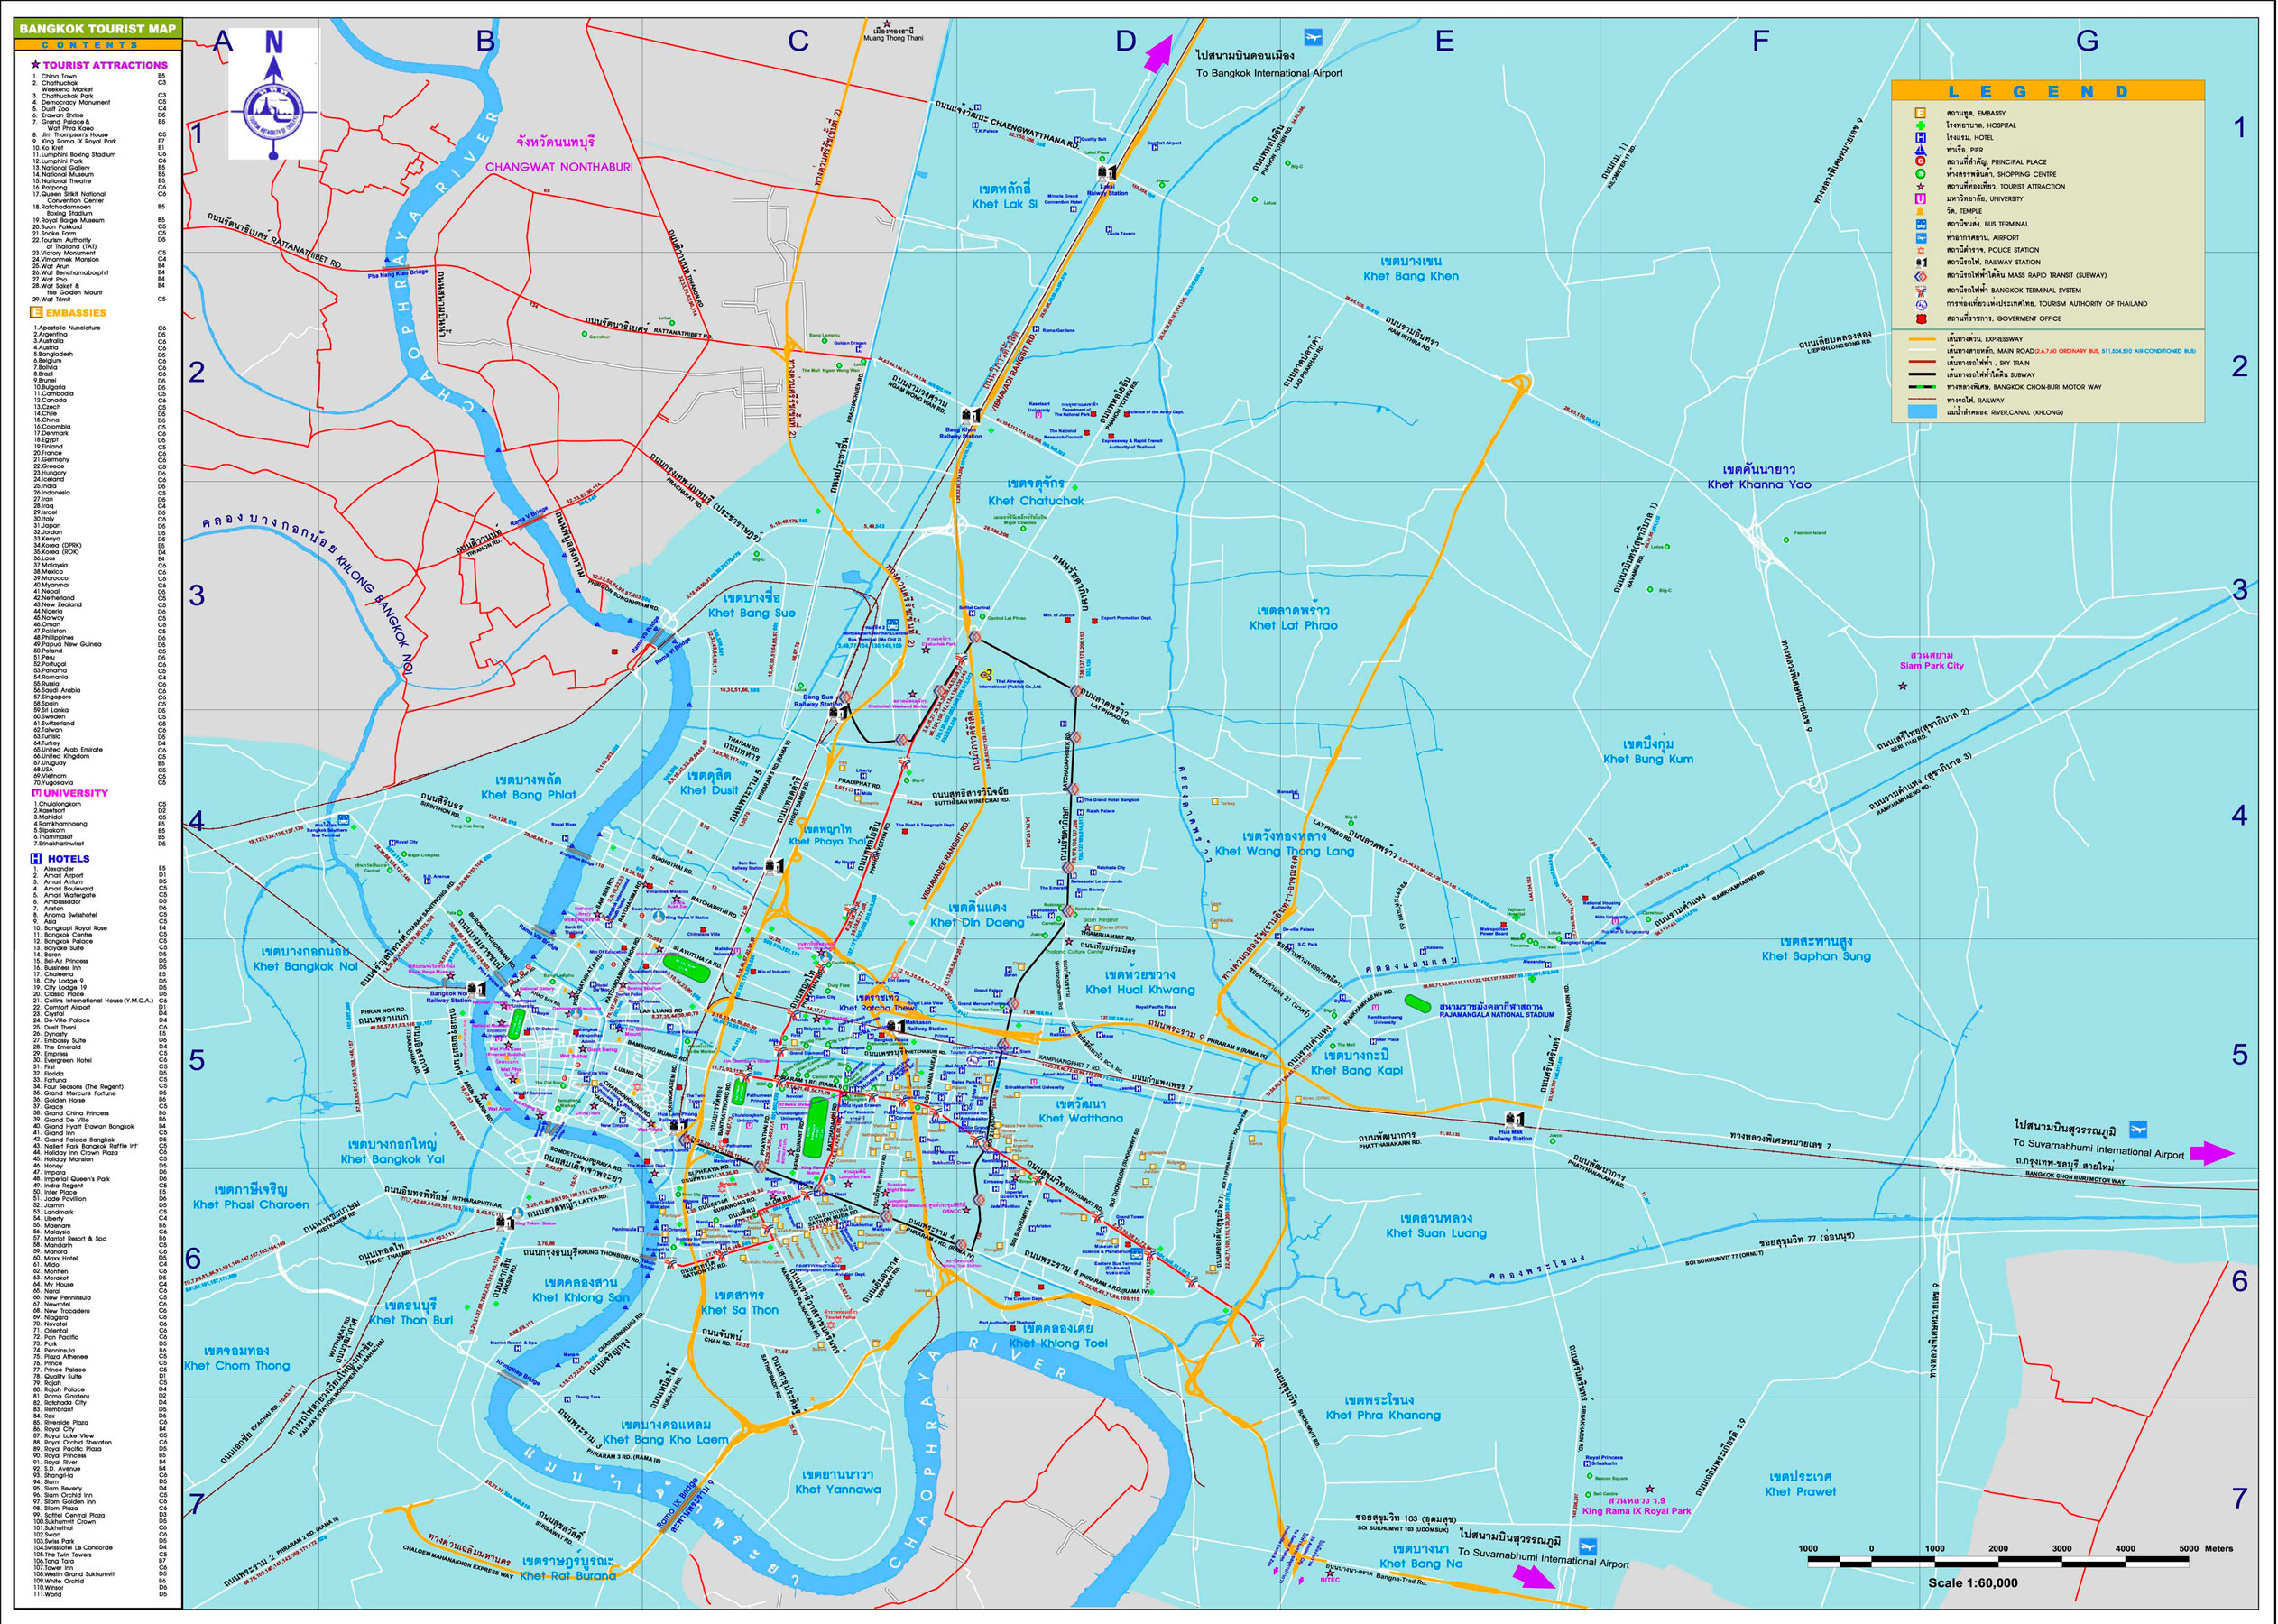 Mapa muy ampliado de Bangkok - Tailandia - Asia